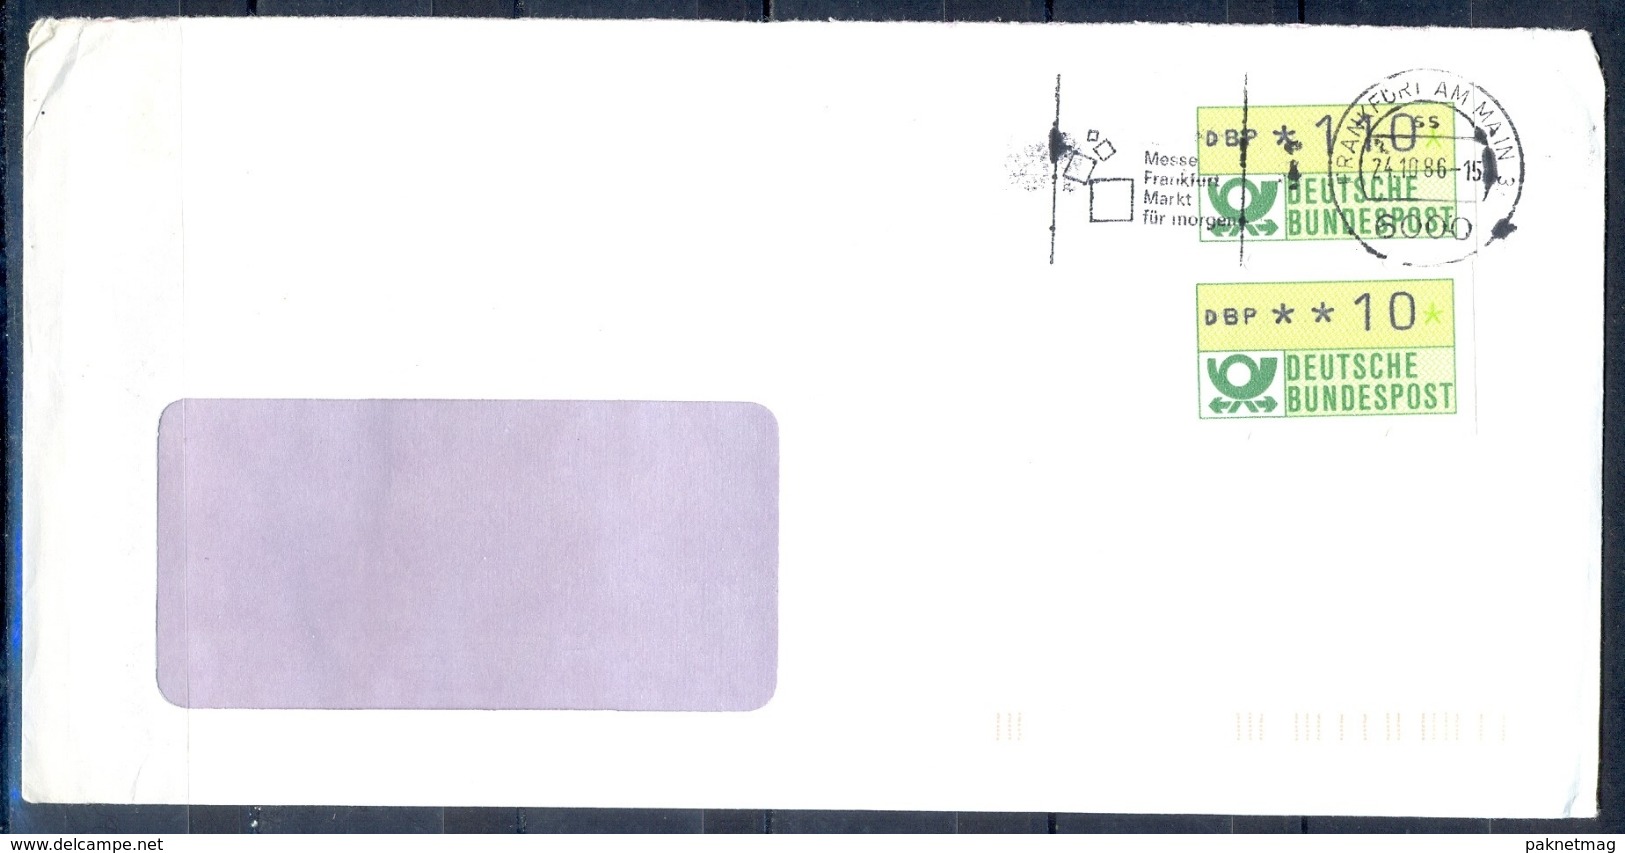 J240- Deutschland Germany Postal History Post Card. ATM Machine Label Stamp. - Franking Machines (EMA)